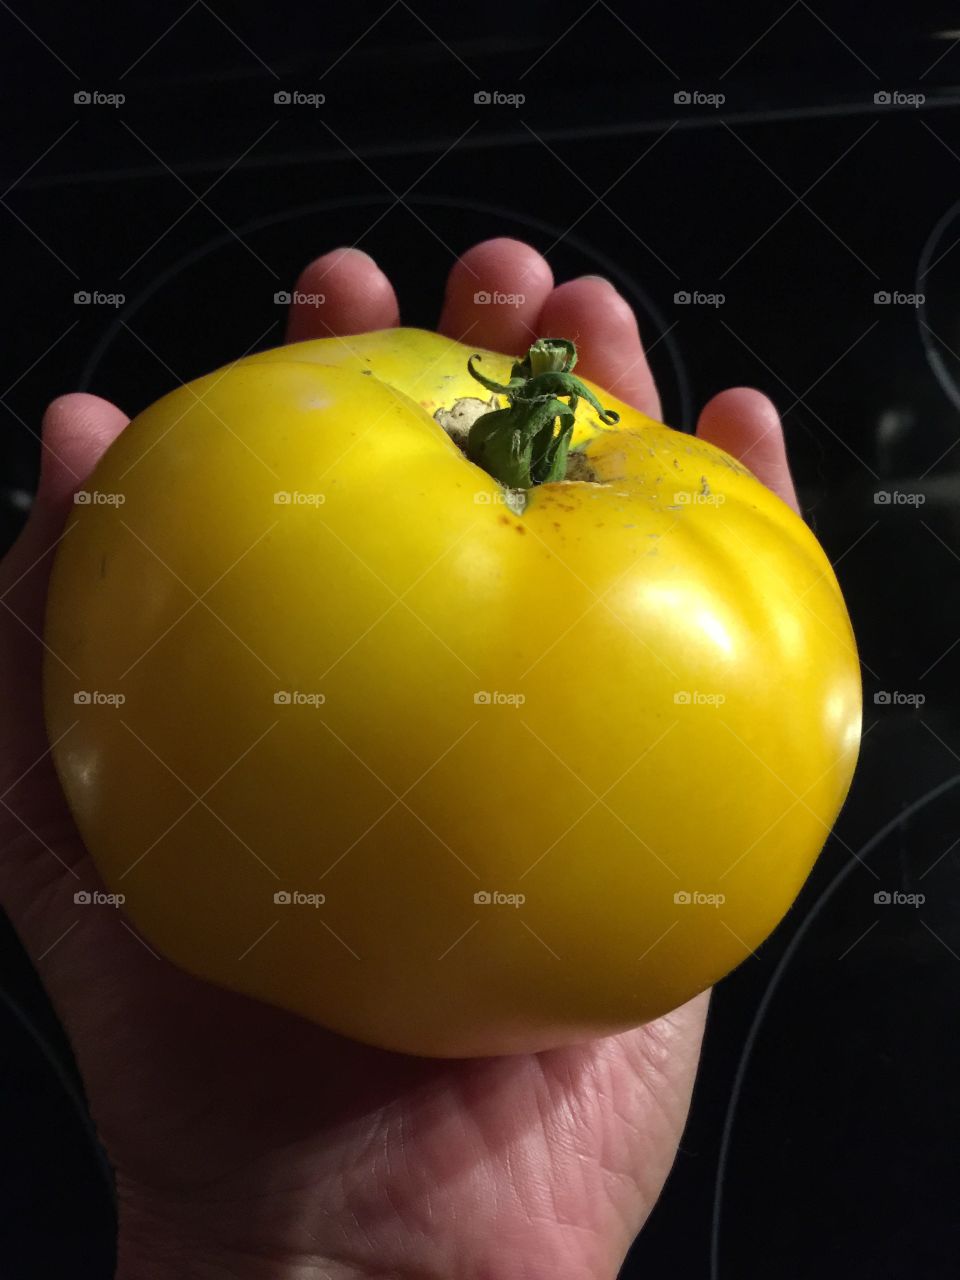 Handling a large yellow tomatoe